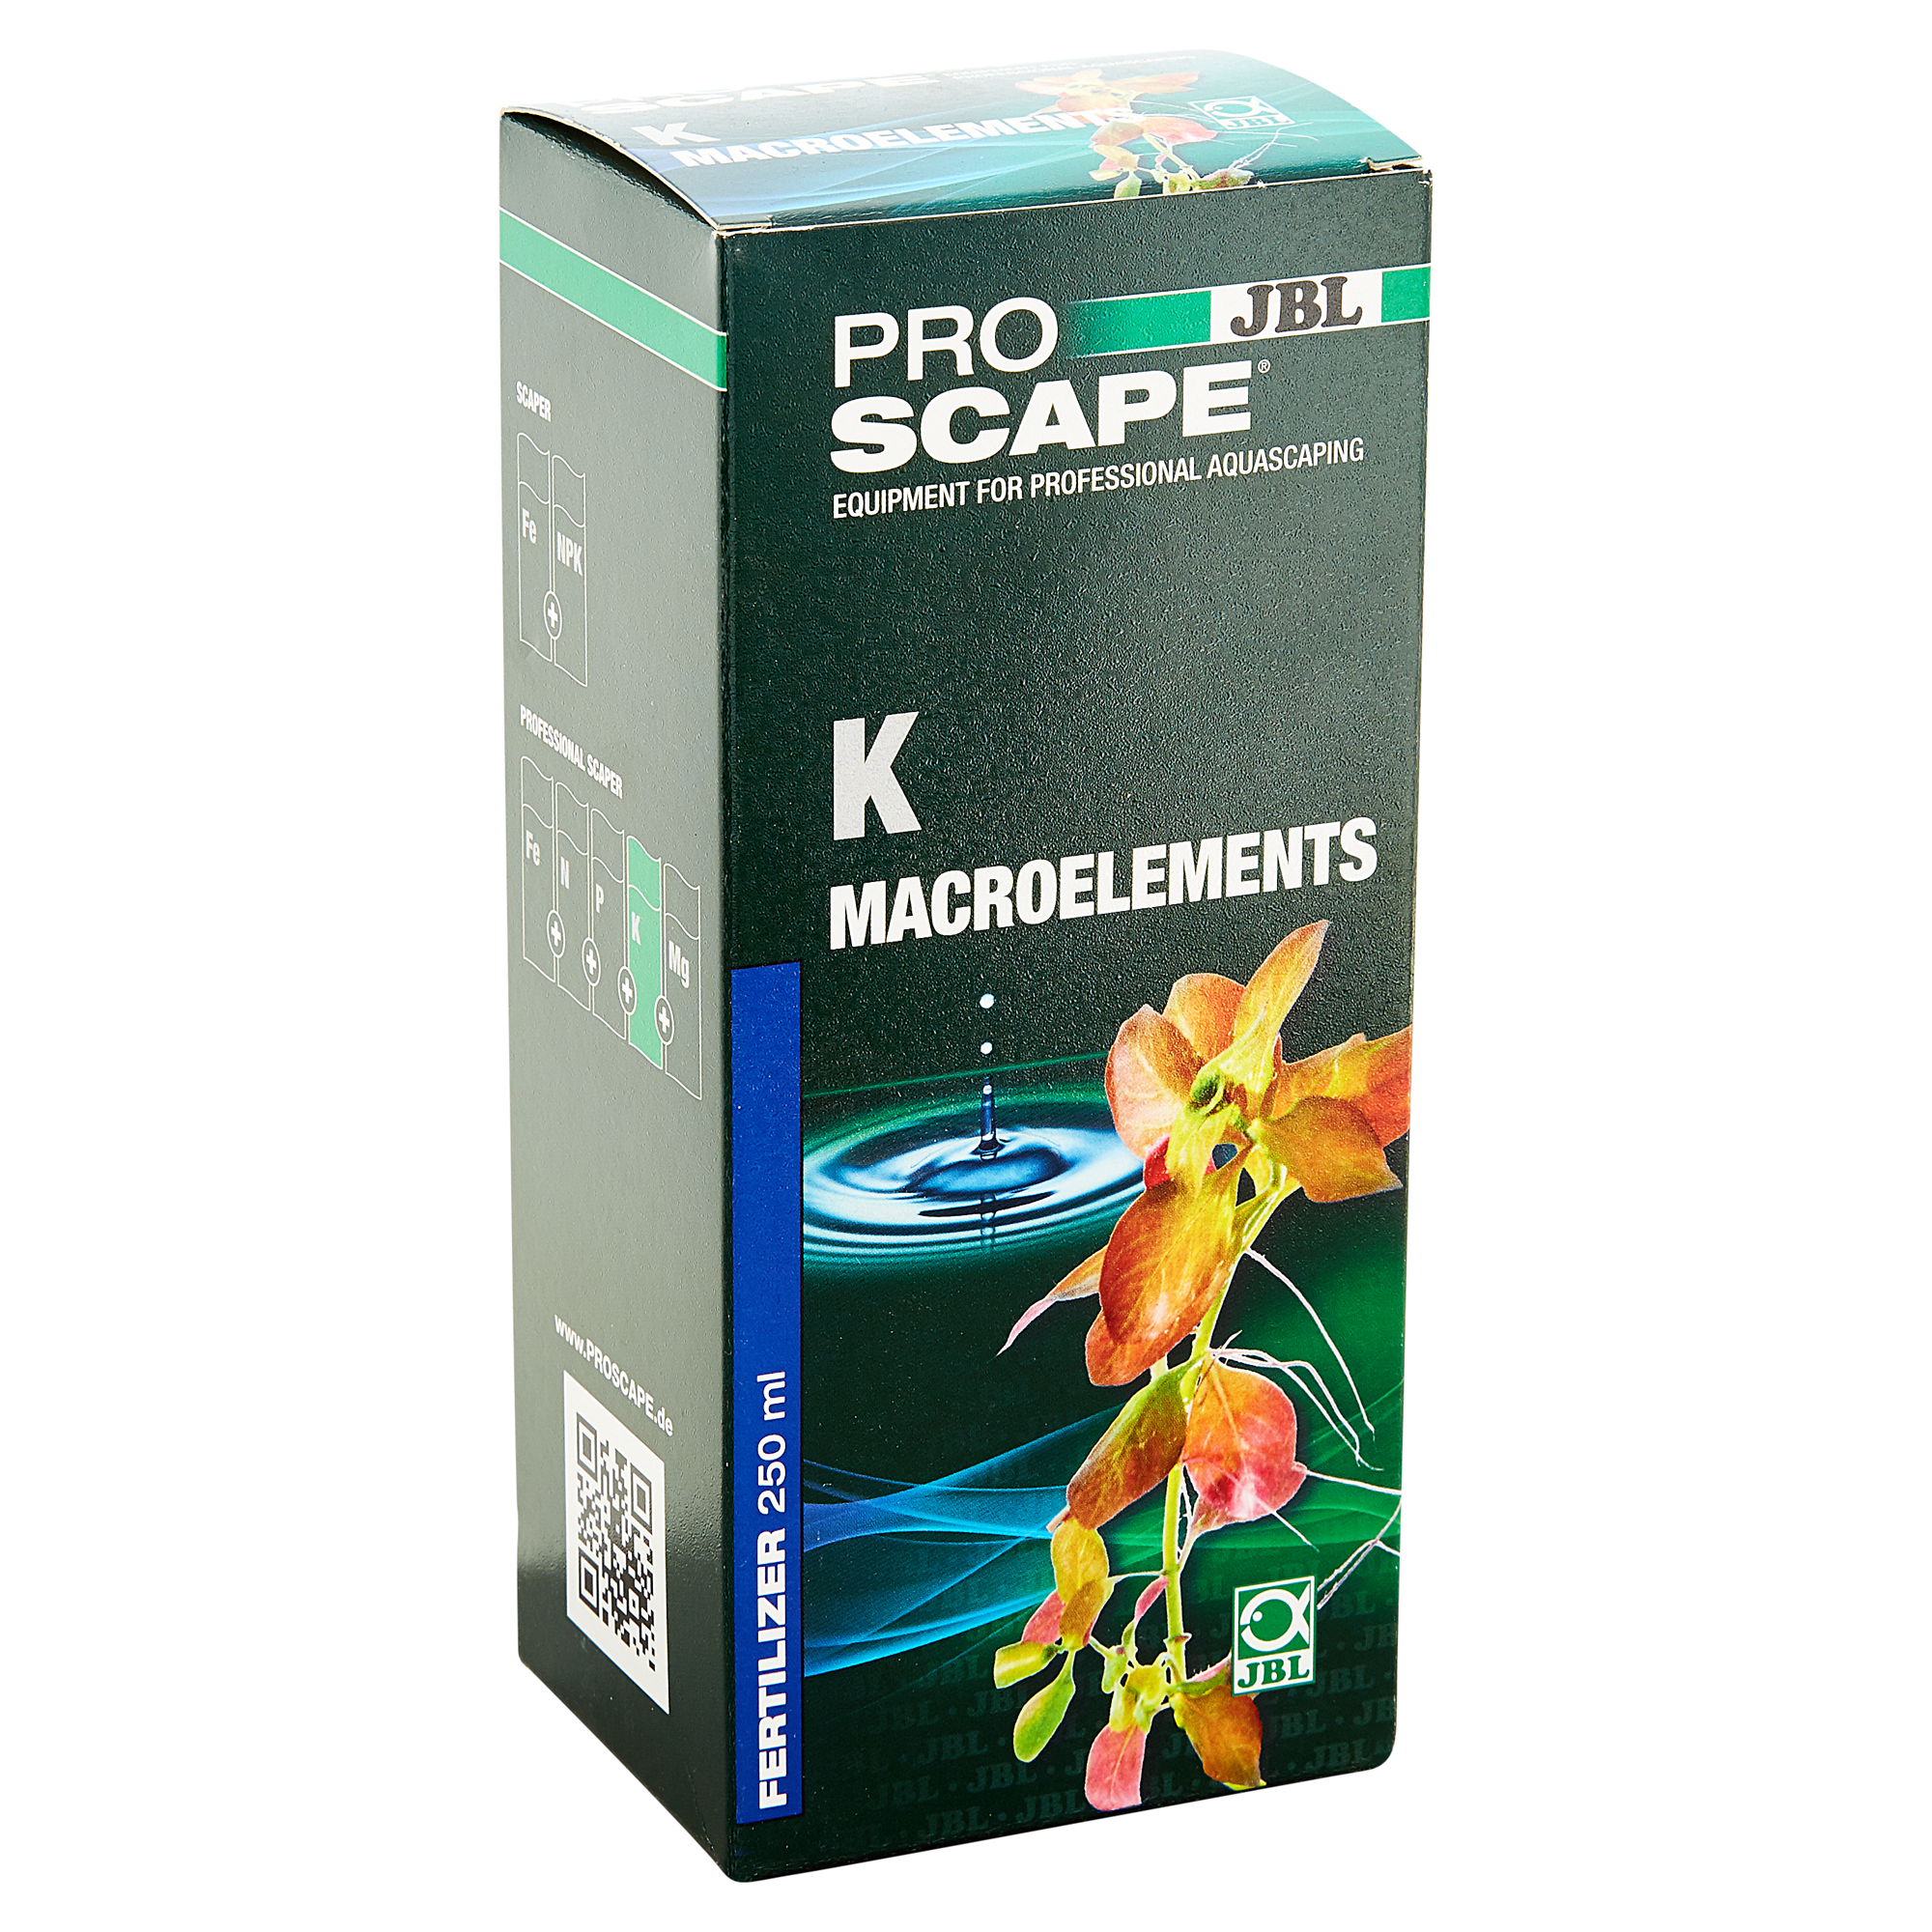 Pflanzendünger K Macroelements "Pro Scape" 250 ml + product picture